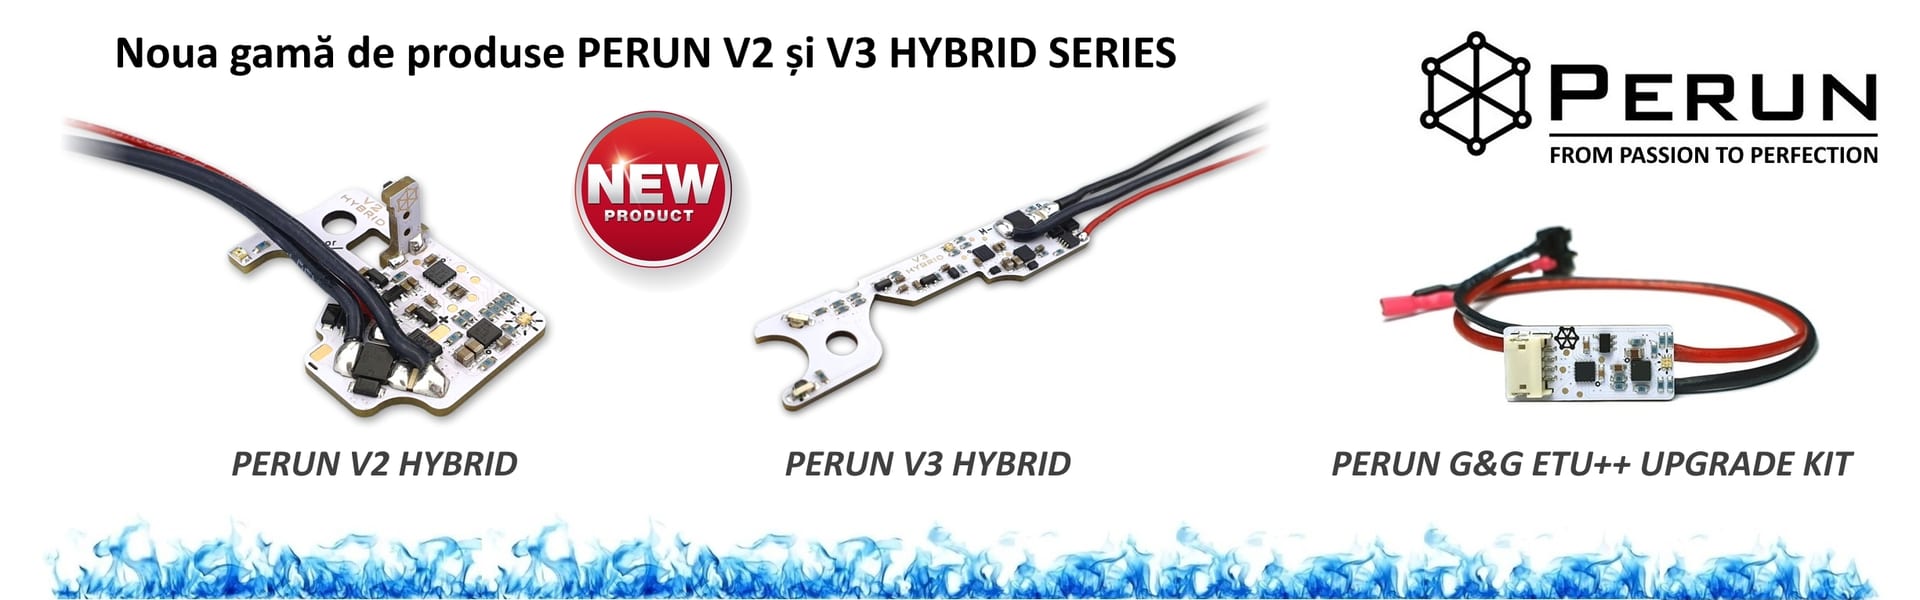 Banner Perun Hybrid Series SM